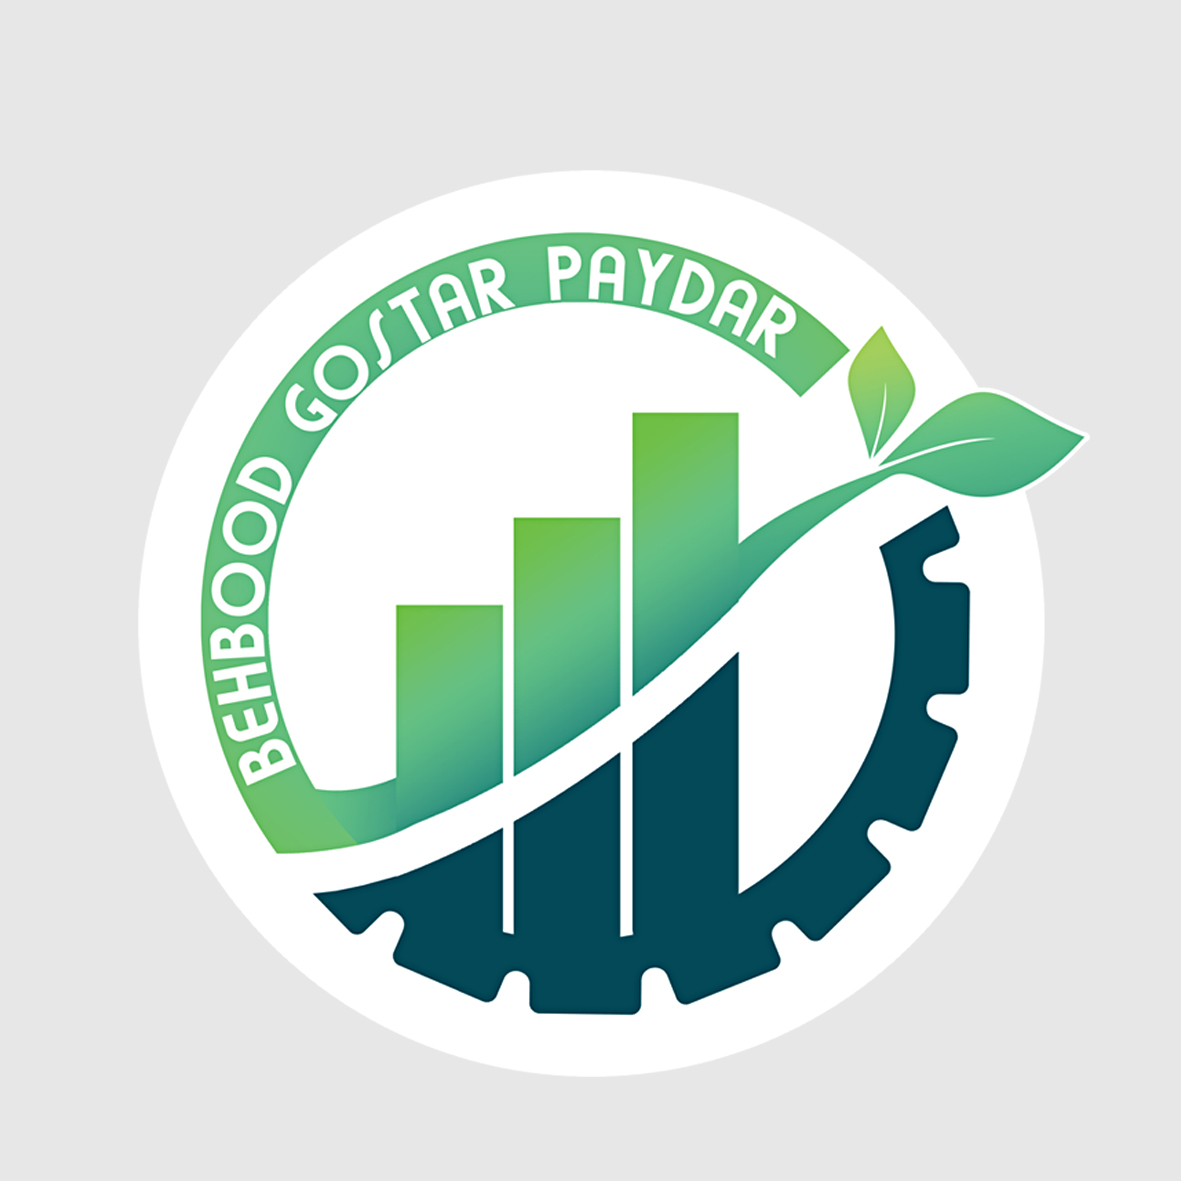 Behbood Gostar Paydar Ltd.